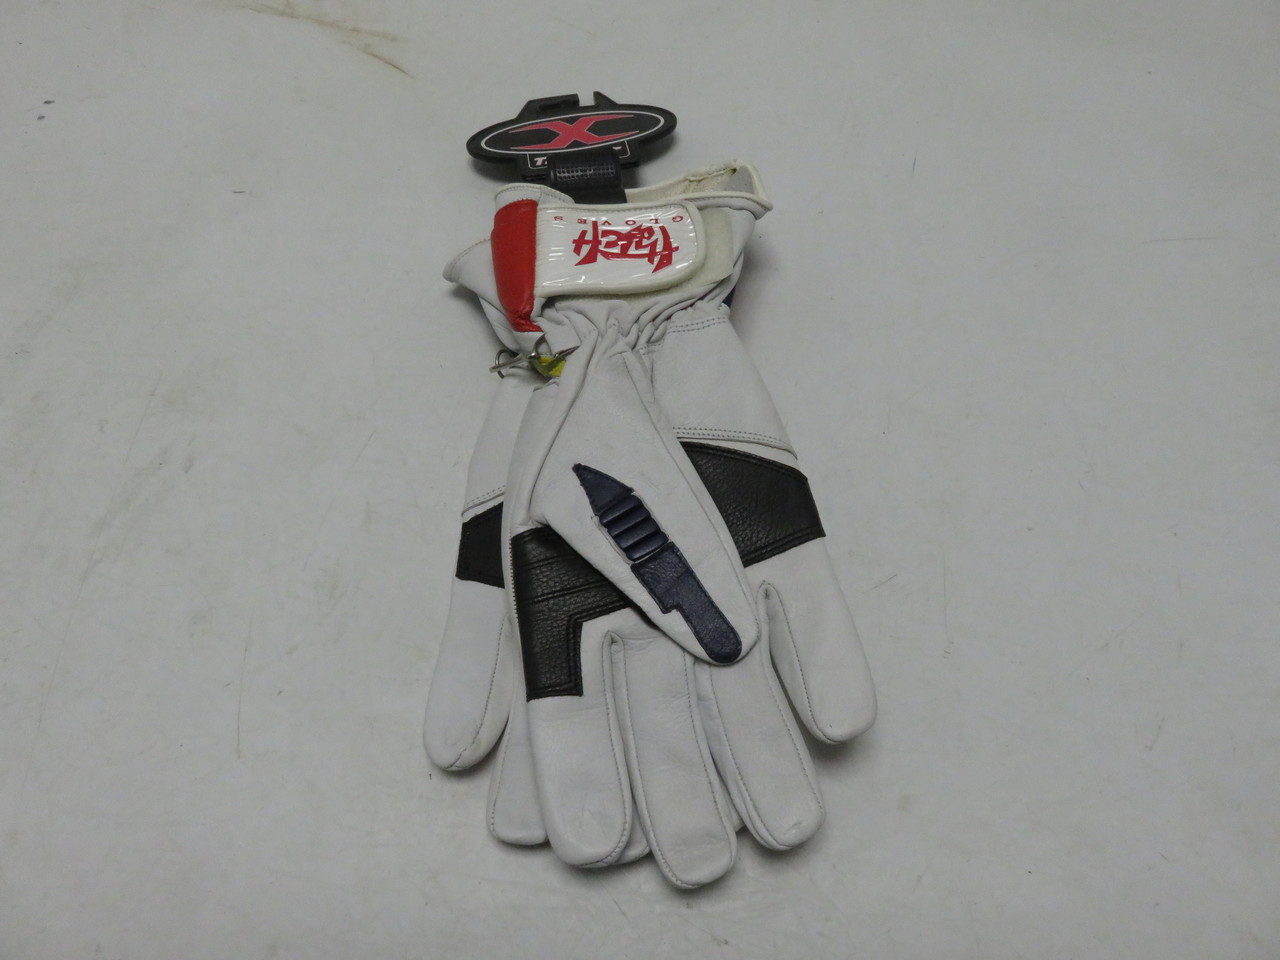 Hatch Kevlar Padded Race Gloves, AMA Club - Adult Size L